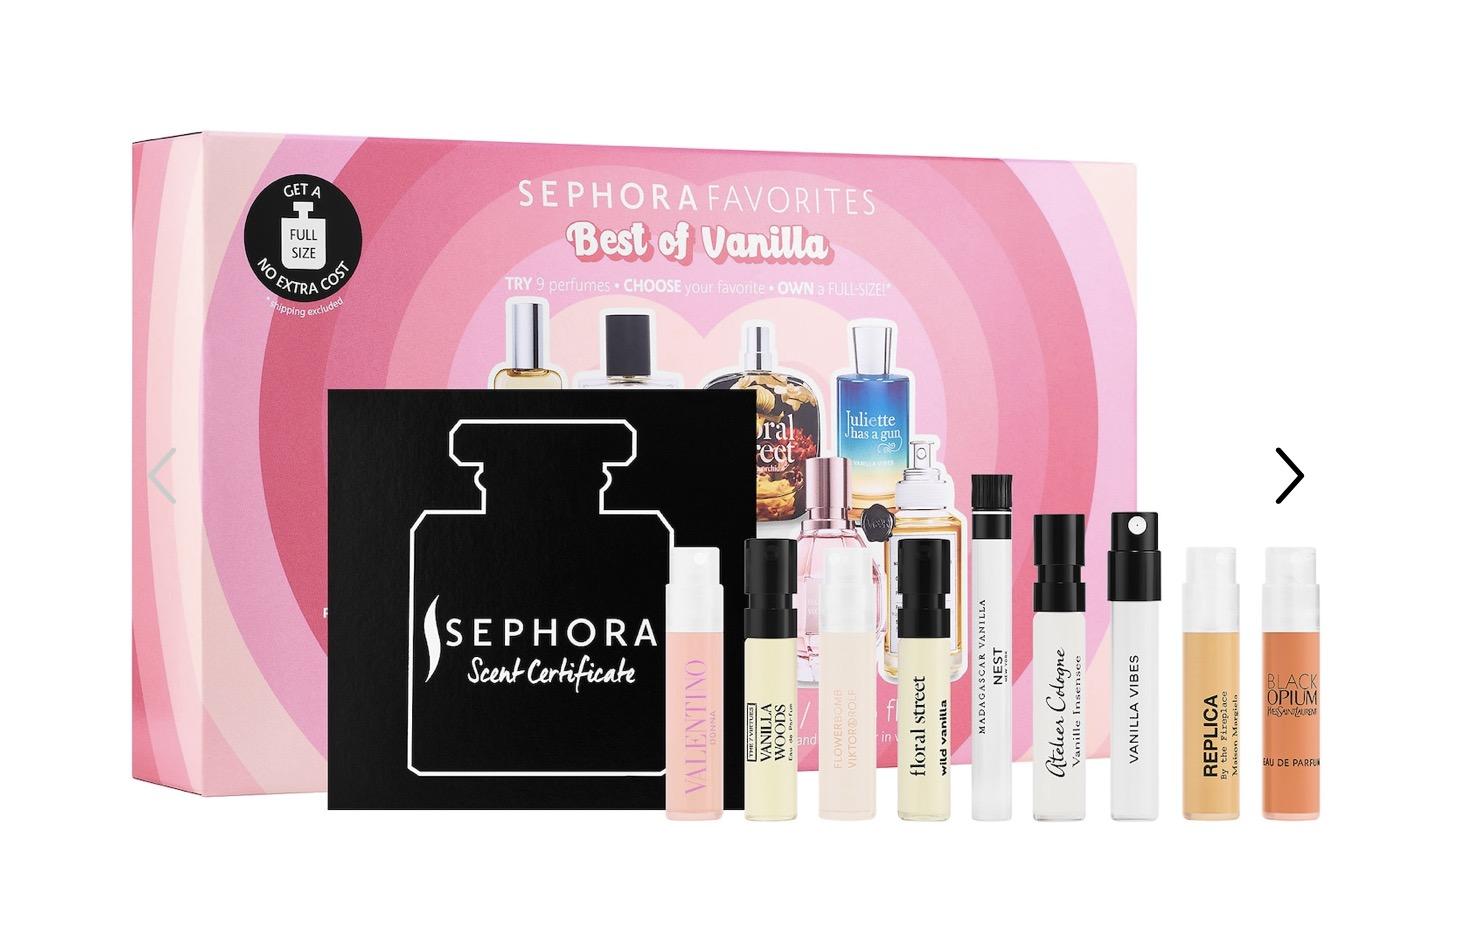 Sephora Favorites Best of Vanilla Perfume Sampler Set – Now Available